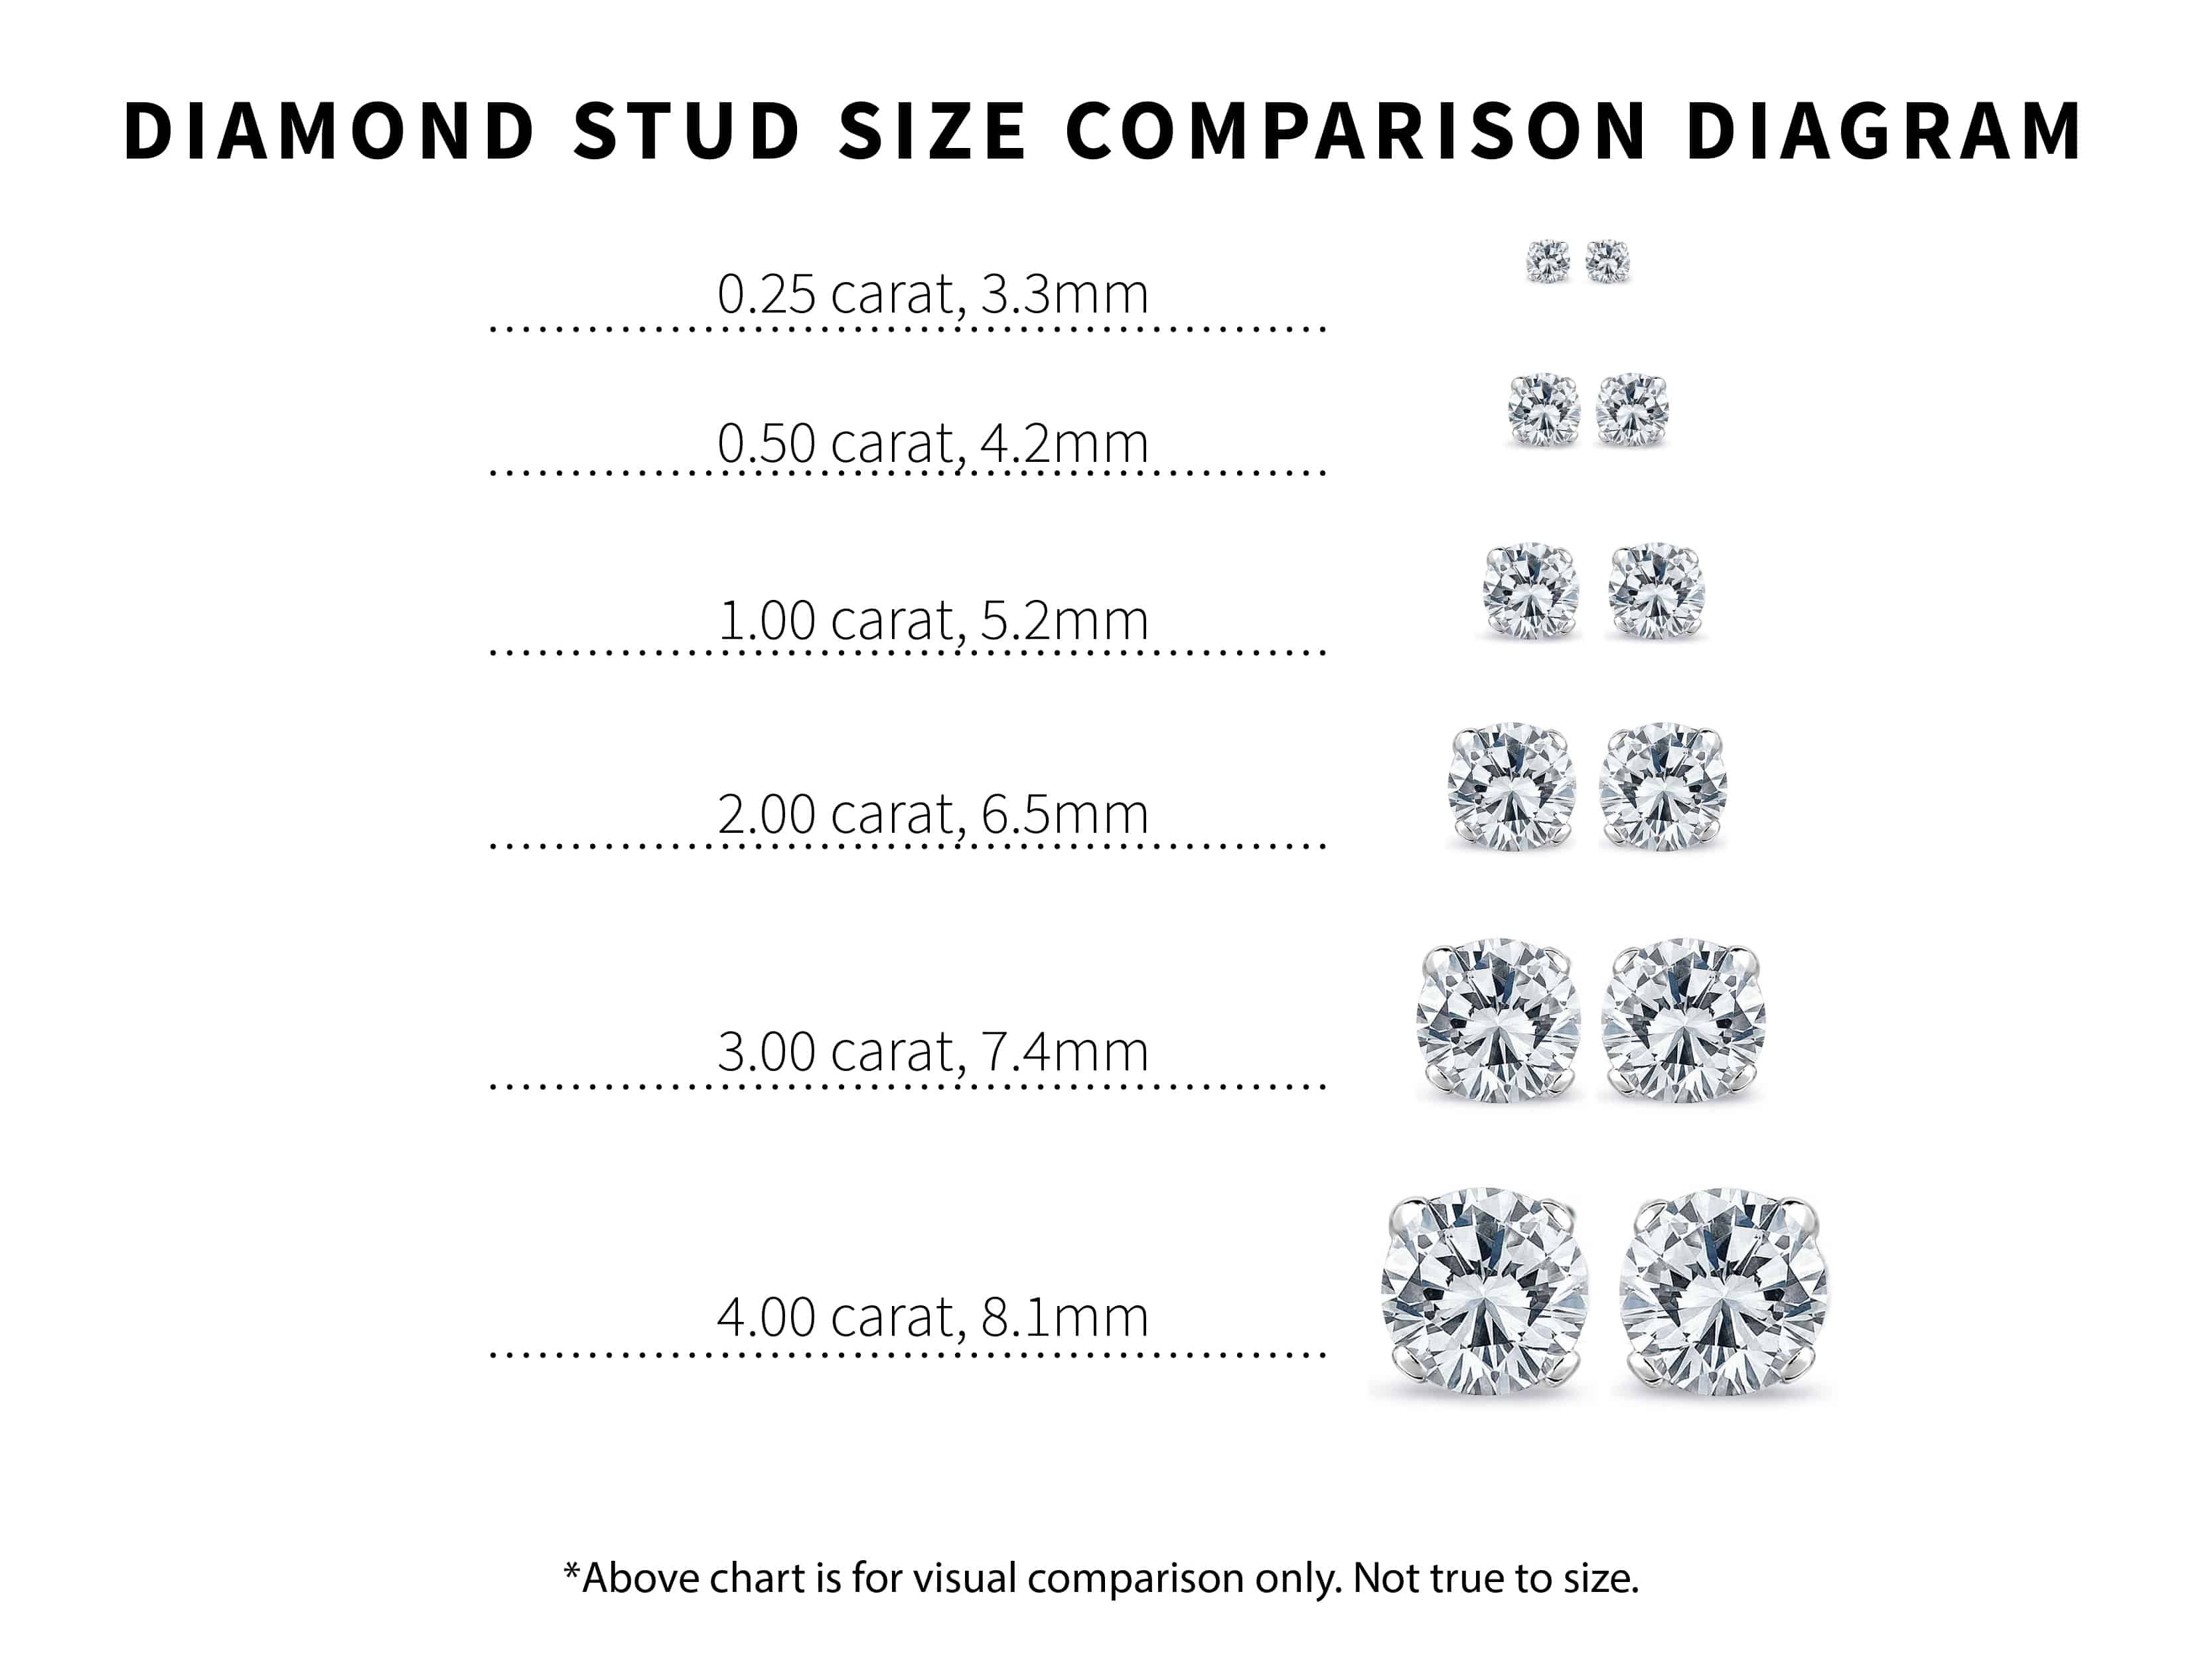 diamond stud comparison diagram